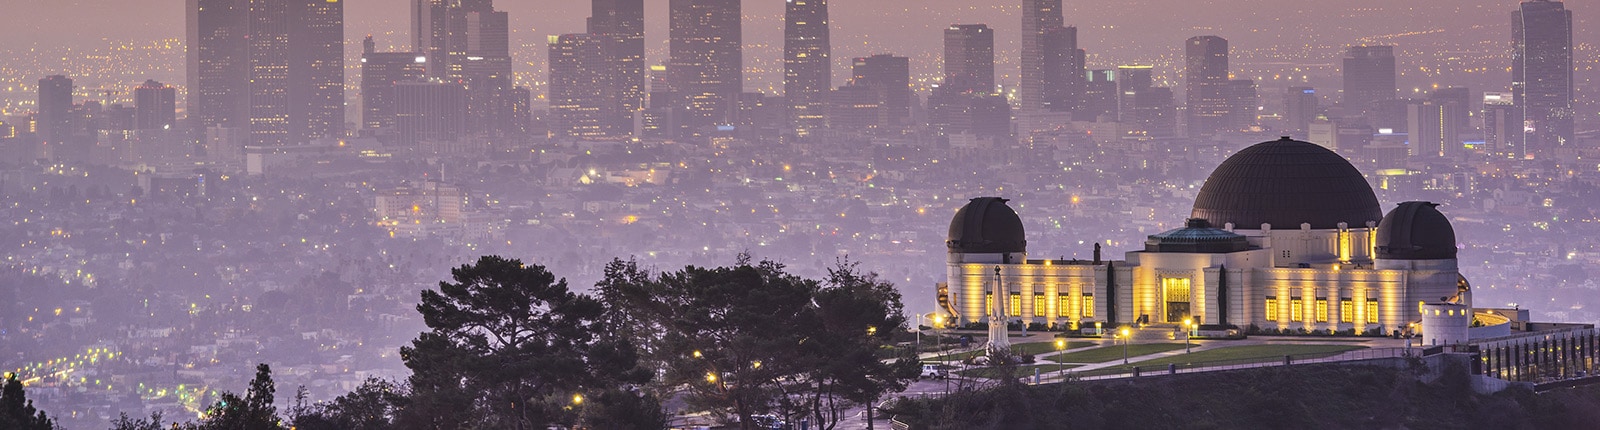 Griffith Observatory set against the LA skyline at dusk